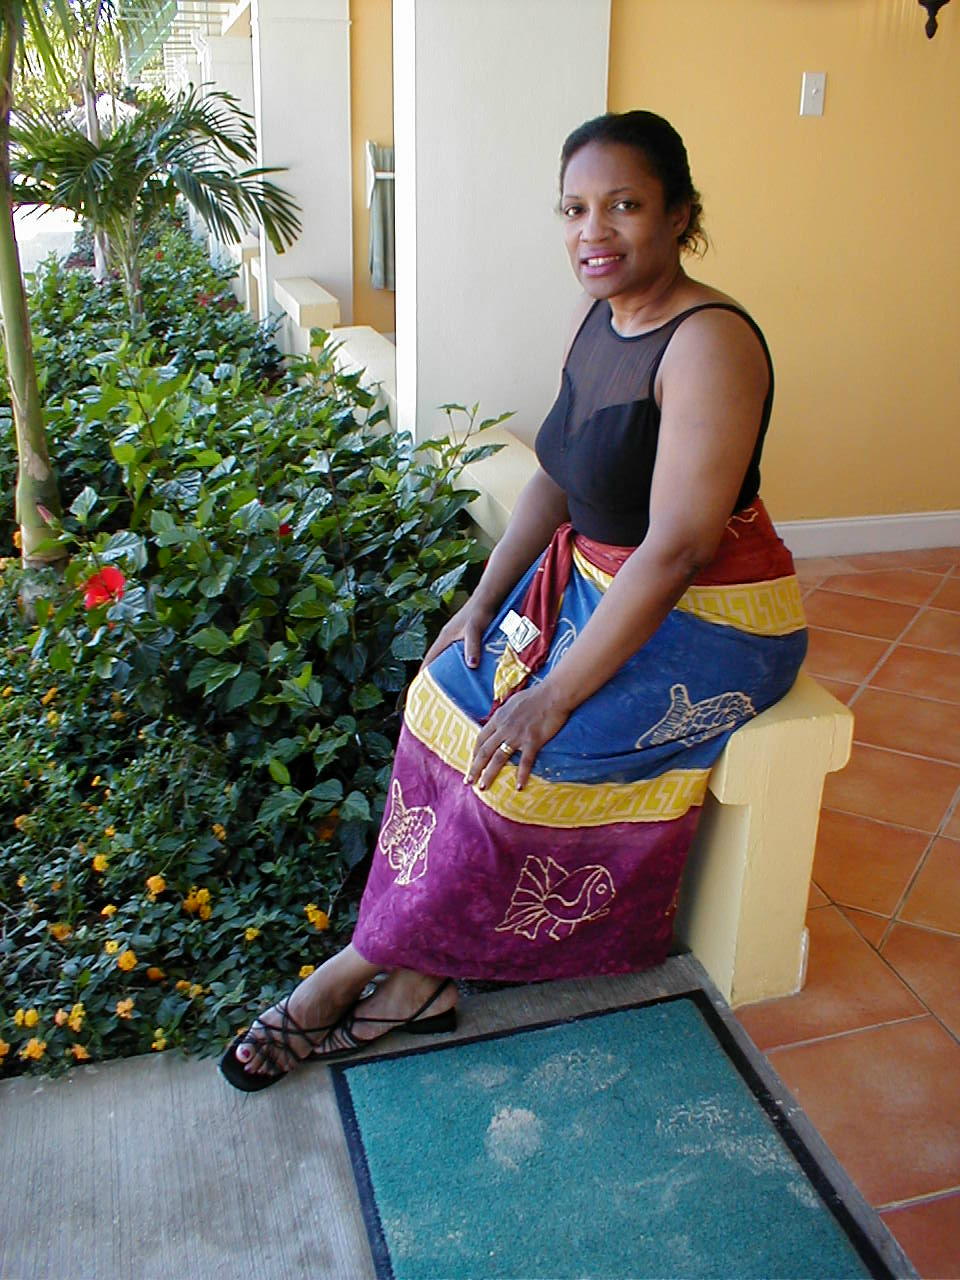 dale-emeagwali-sandals-royal-caribbean-montego-bay-jamaica_march-19-2001.jpg